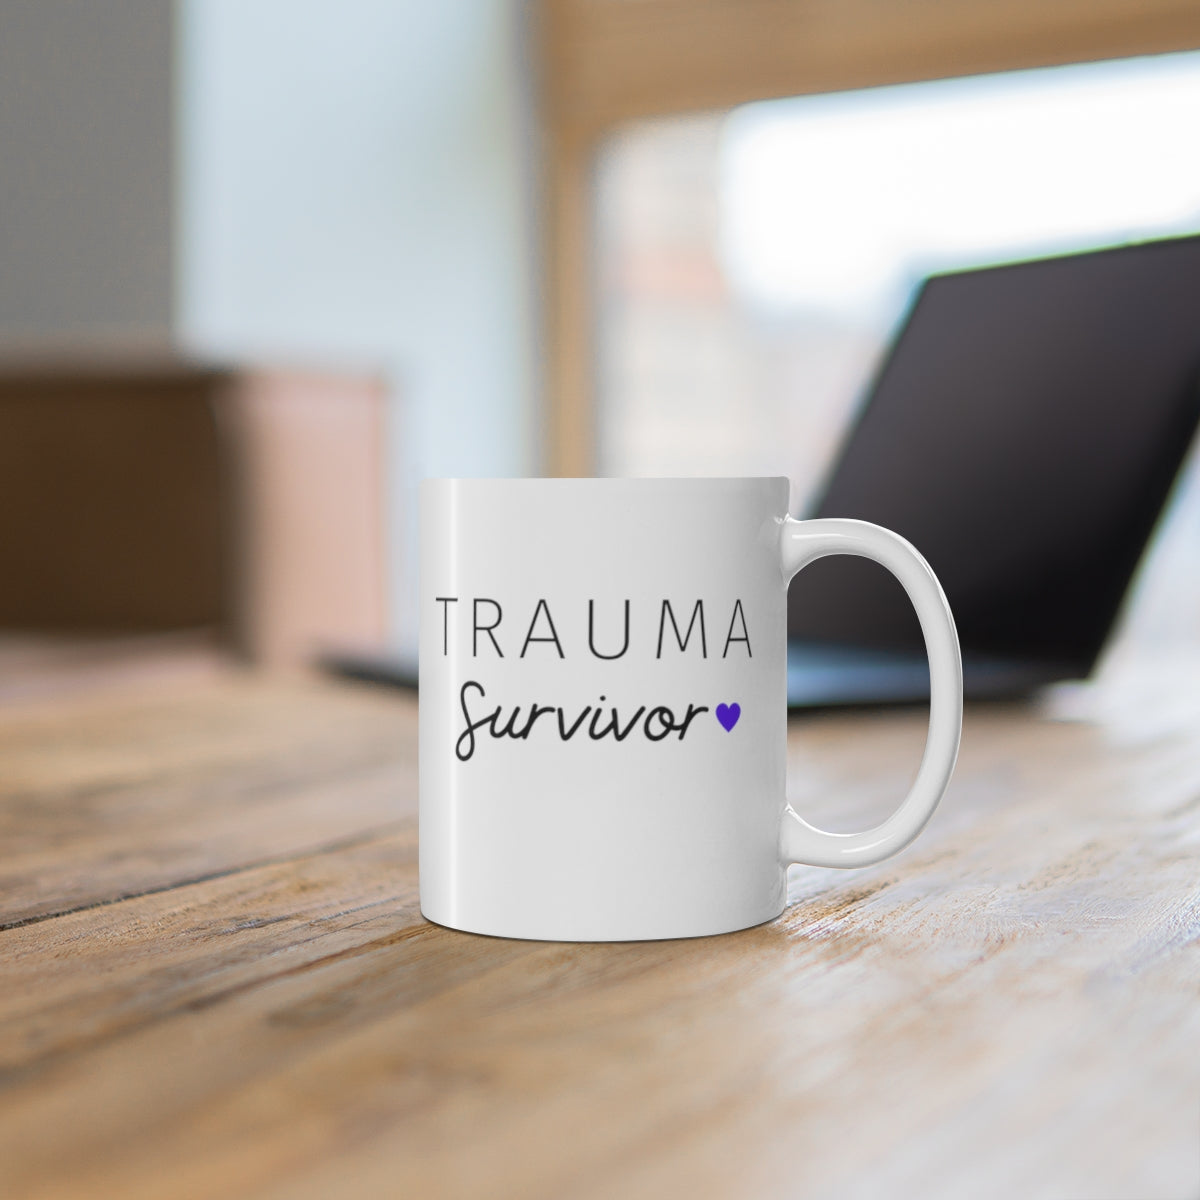 Trauma Survivor Mug Double Sided White Ceramic Coffee Tea Mug- Inspirational Birthday Gift, Motivational Mug, Daily Affirmation Mug, Self Care Gift